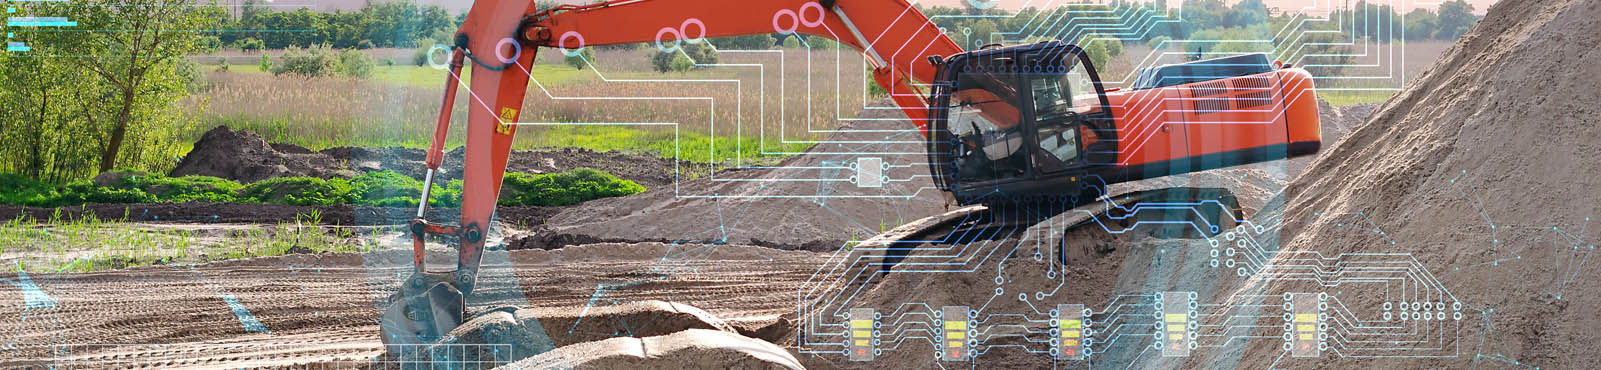 Smart Sensors: Opportunities for Construction Industry Savings